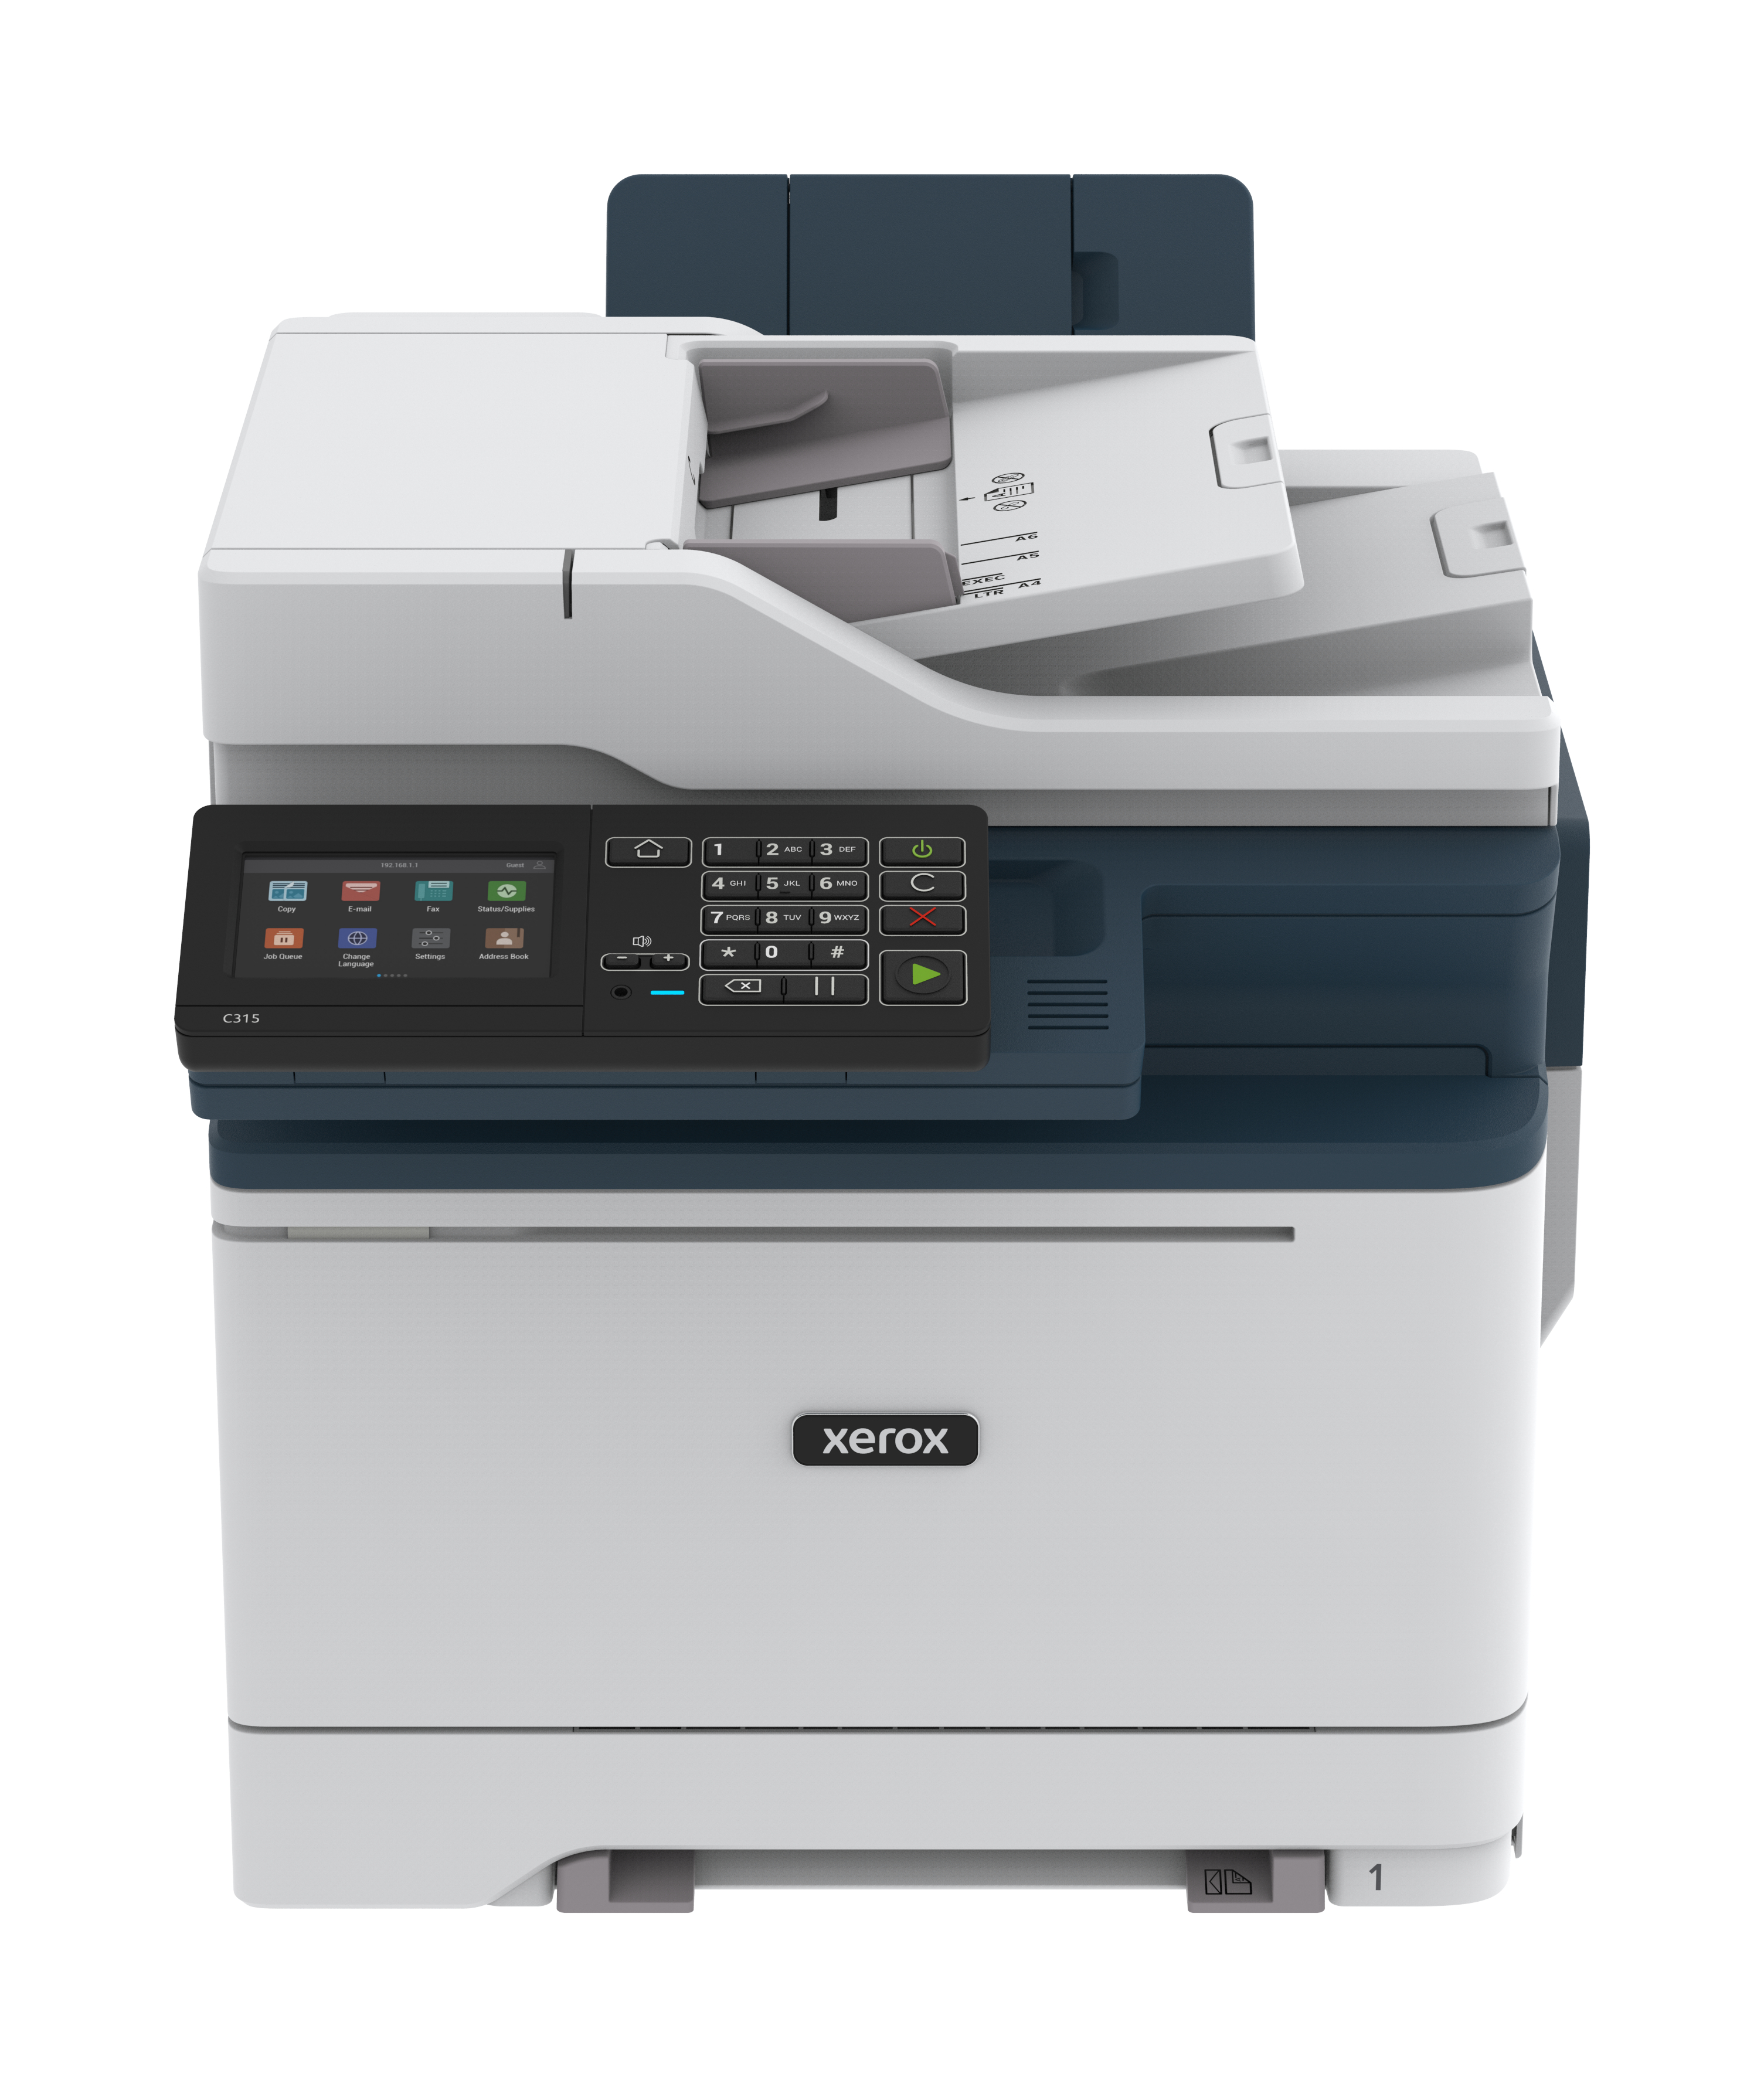 Xerox® C315 Colour Multifunction Printer - Front